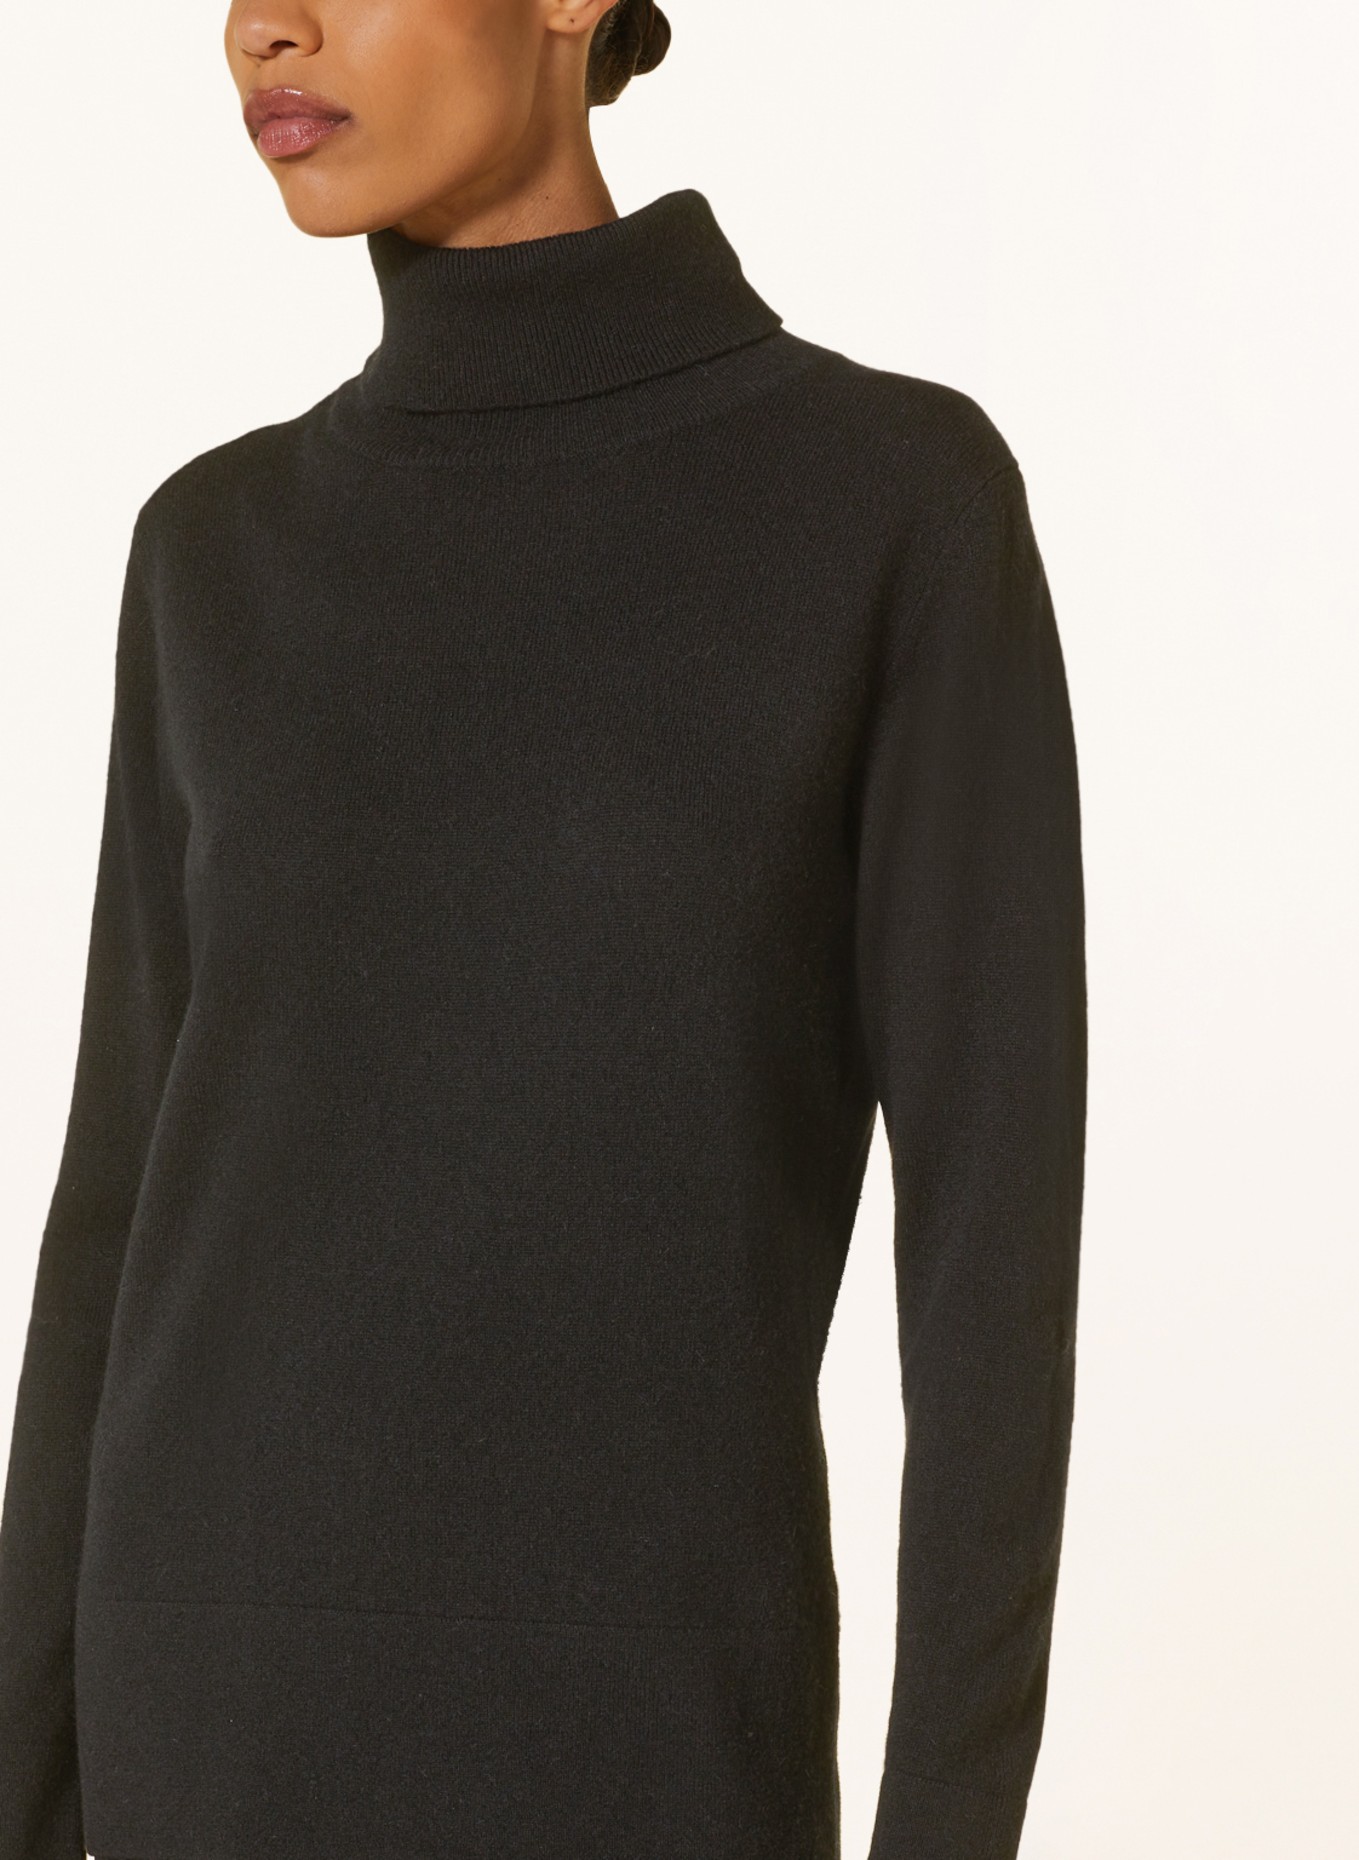 (THE MERCER) N.Y. Turtleneck sweater in cashmere, Color: BLACK (Image 4)